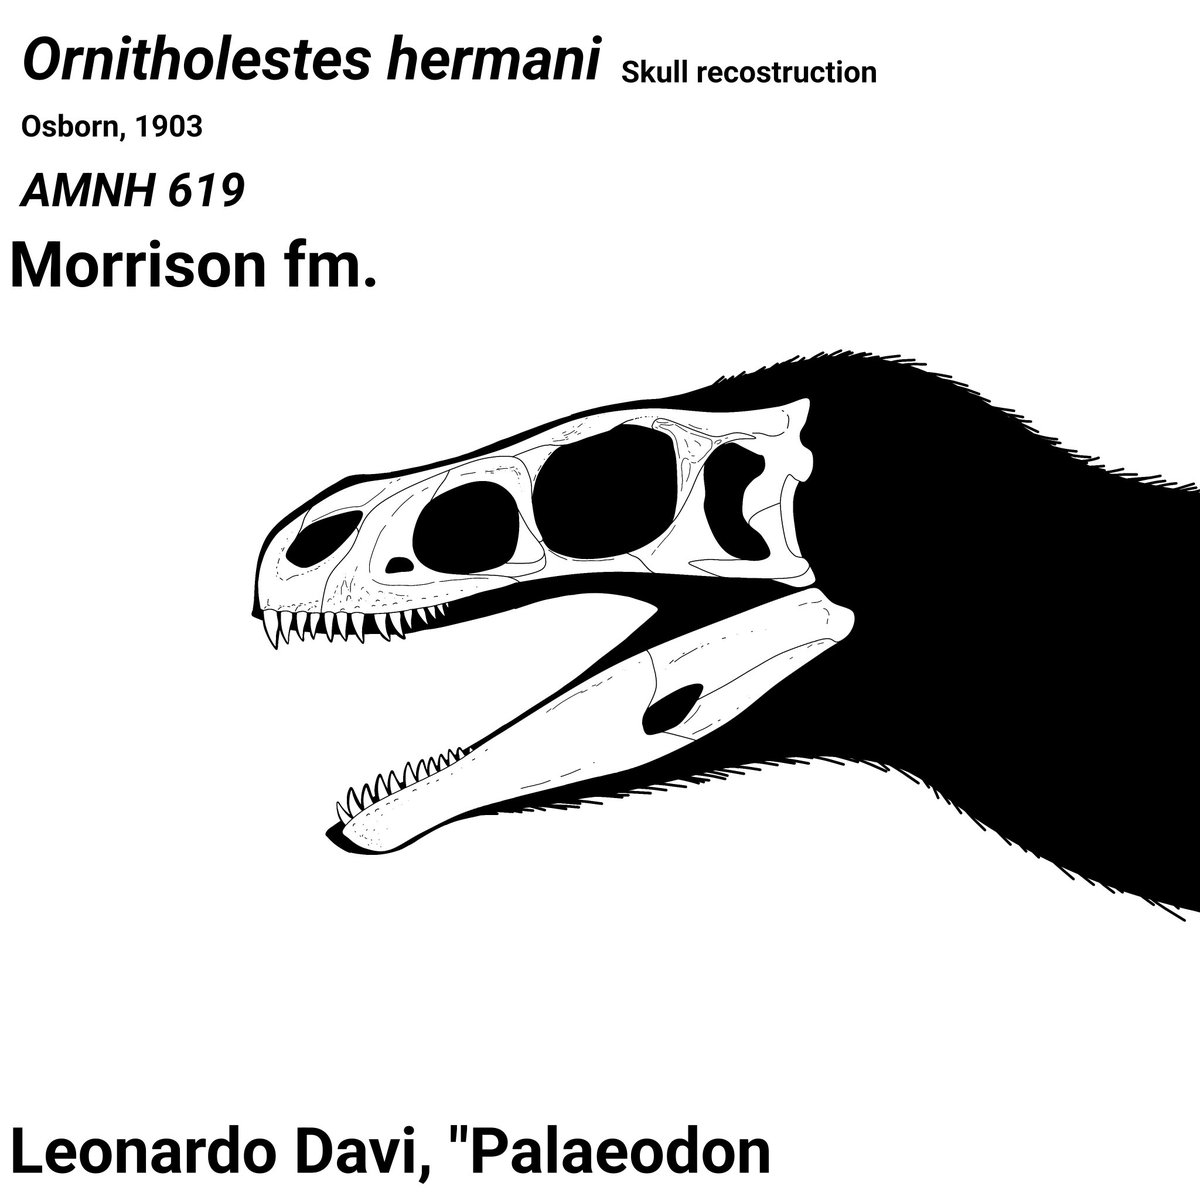 🎉 TY TO 200 FOLLOWERS! 🎉

I love yall!

Here is a Ornitholestes skull recostruction!